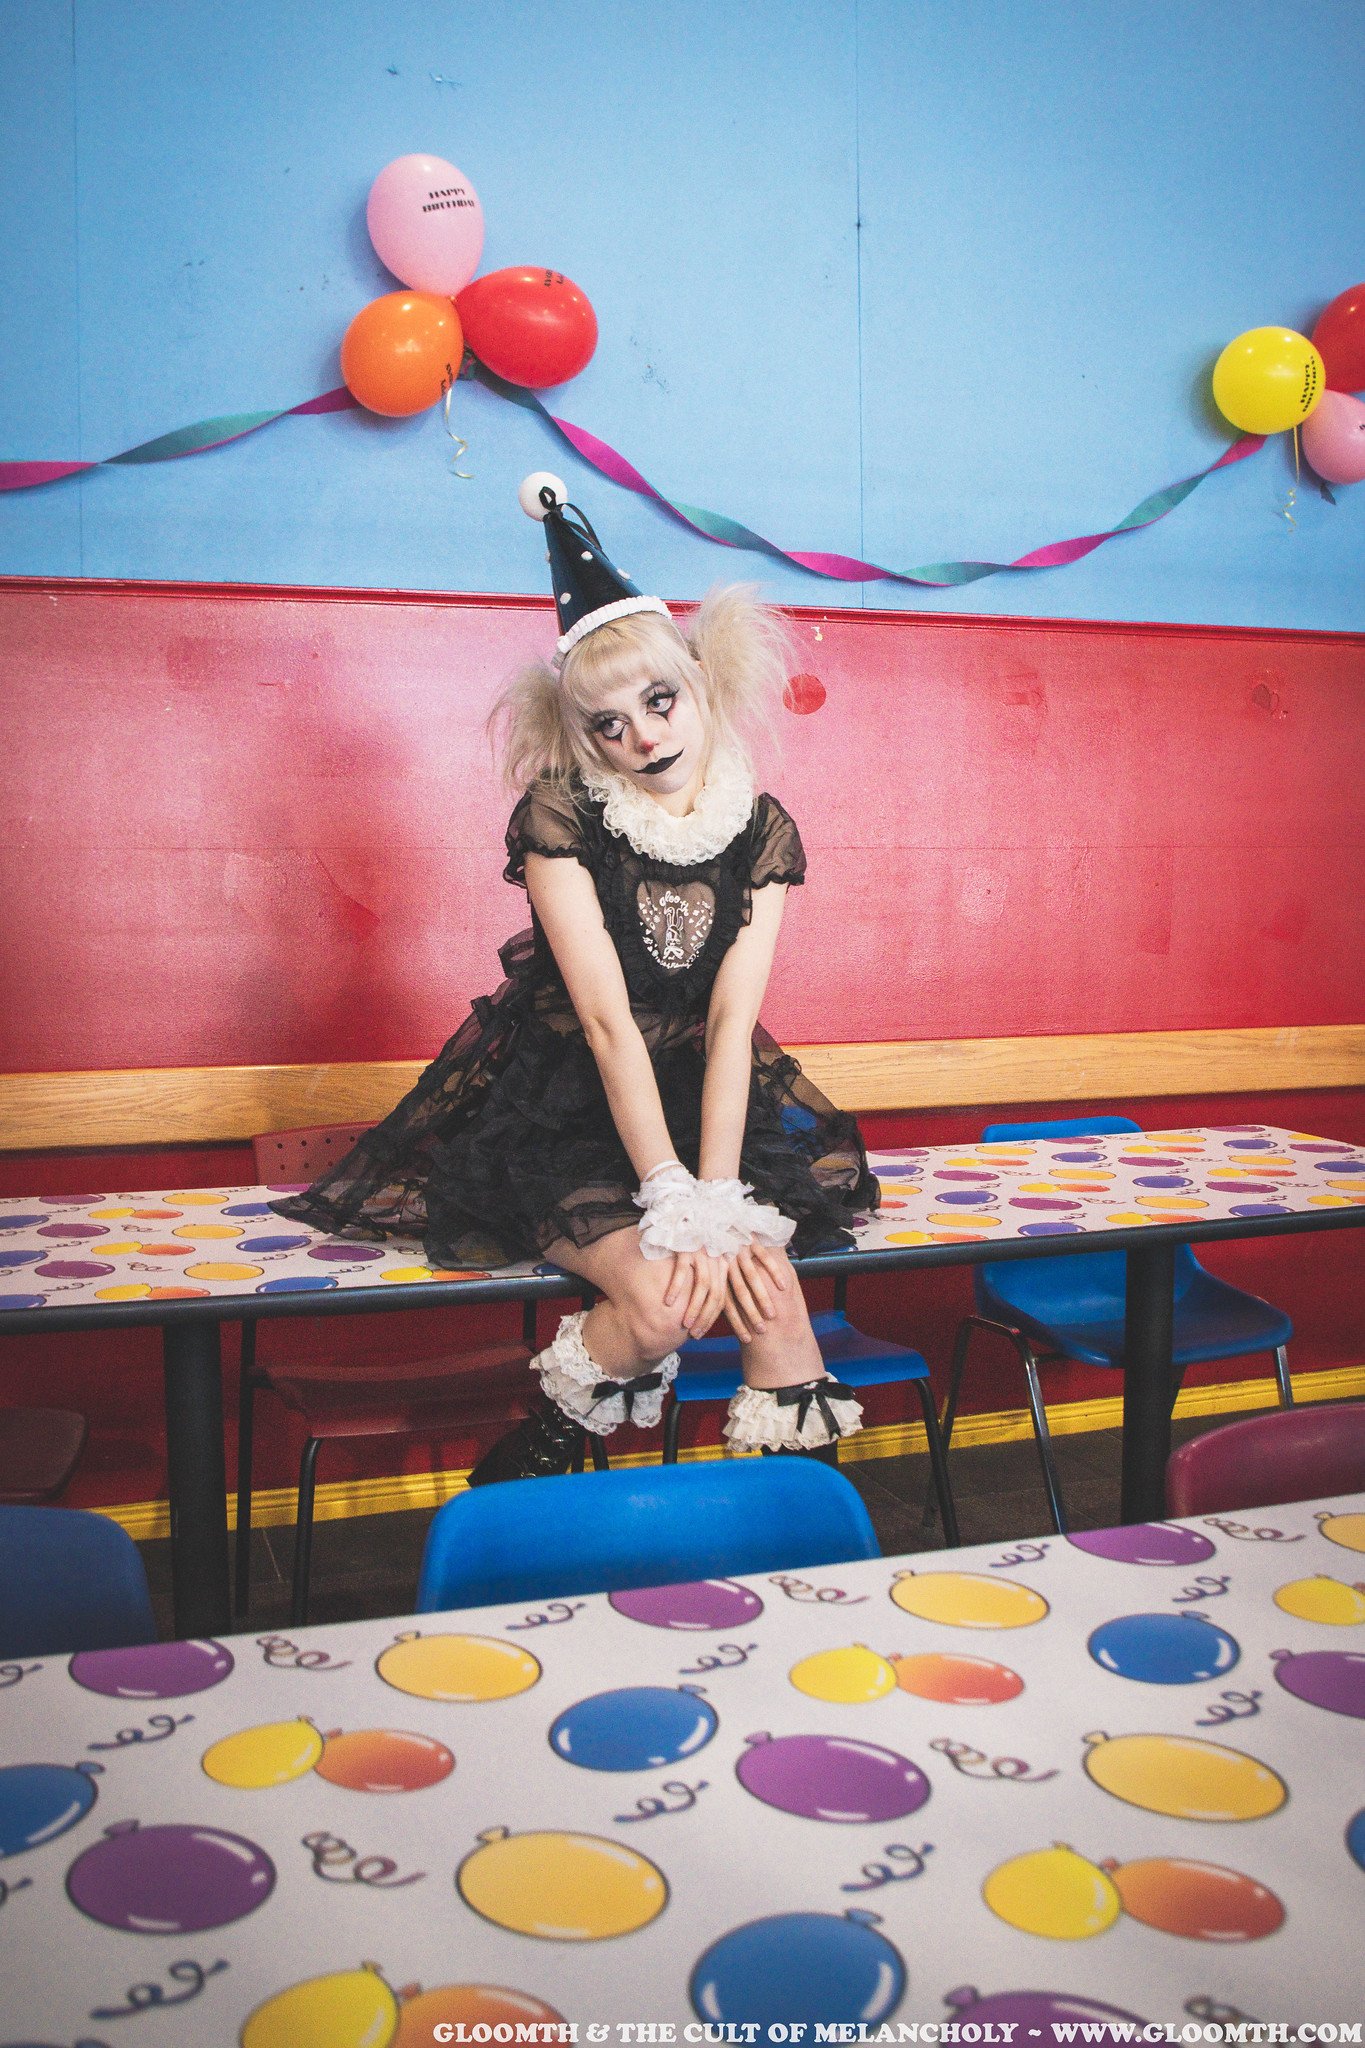 sad clown girl alone at party - Copy.jpg